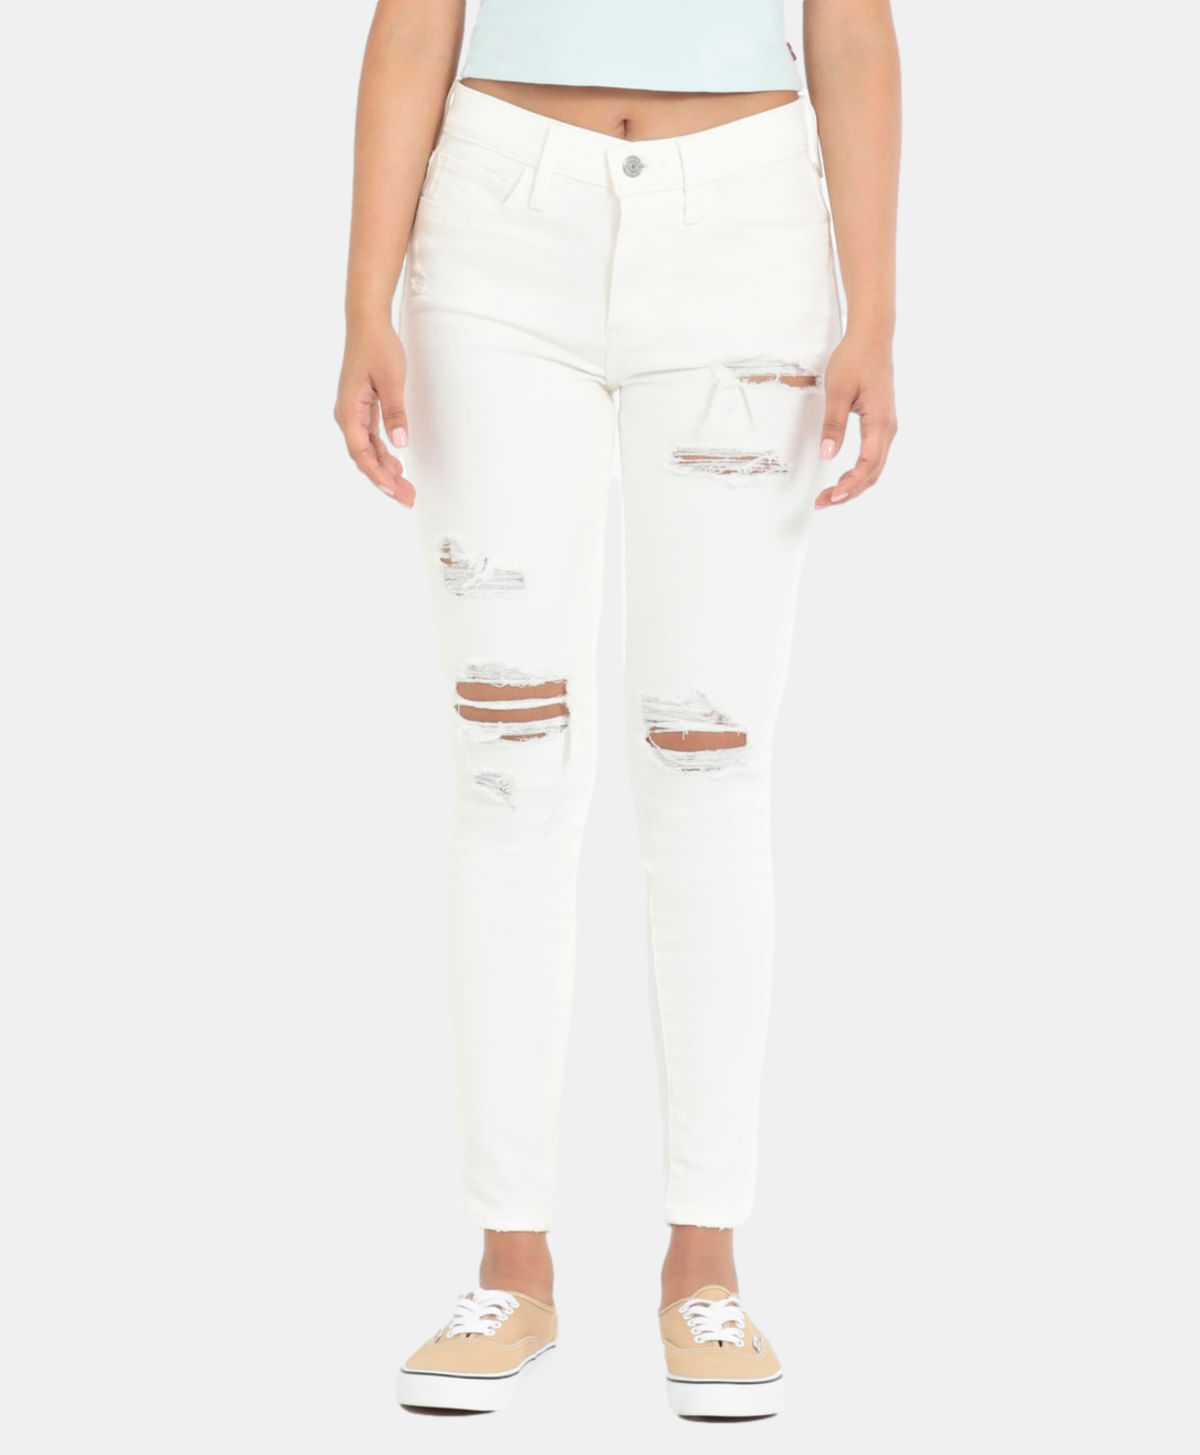 Blanco Jeans Mujer| Levi's® México - Levi's® México